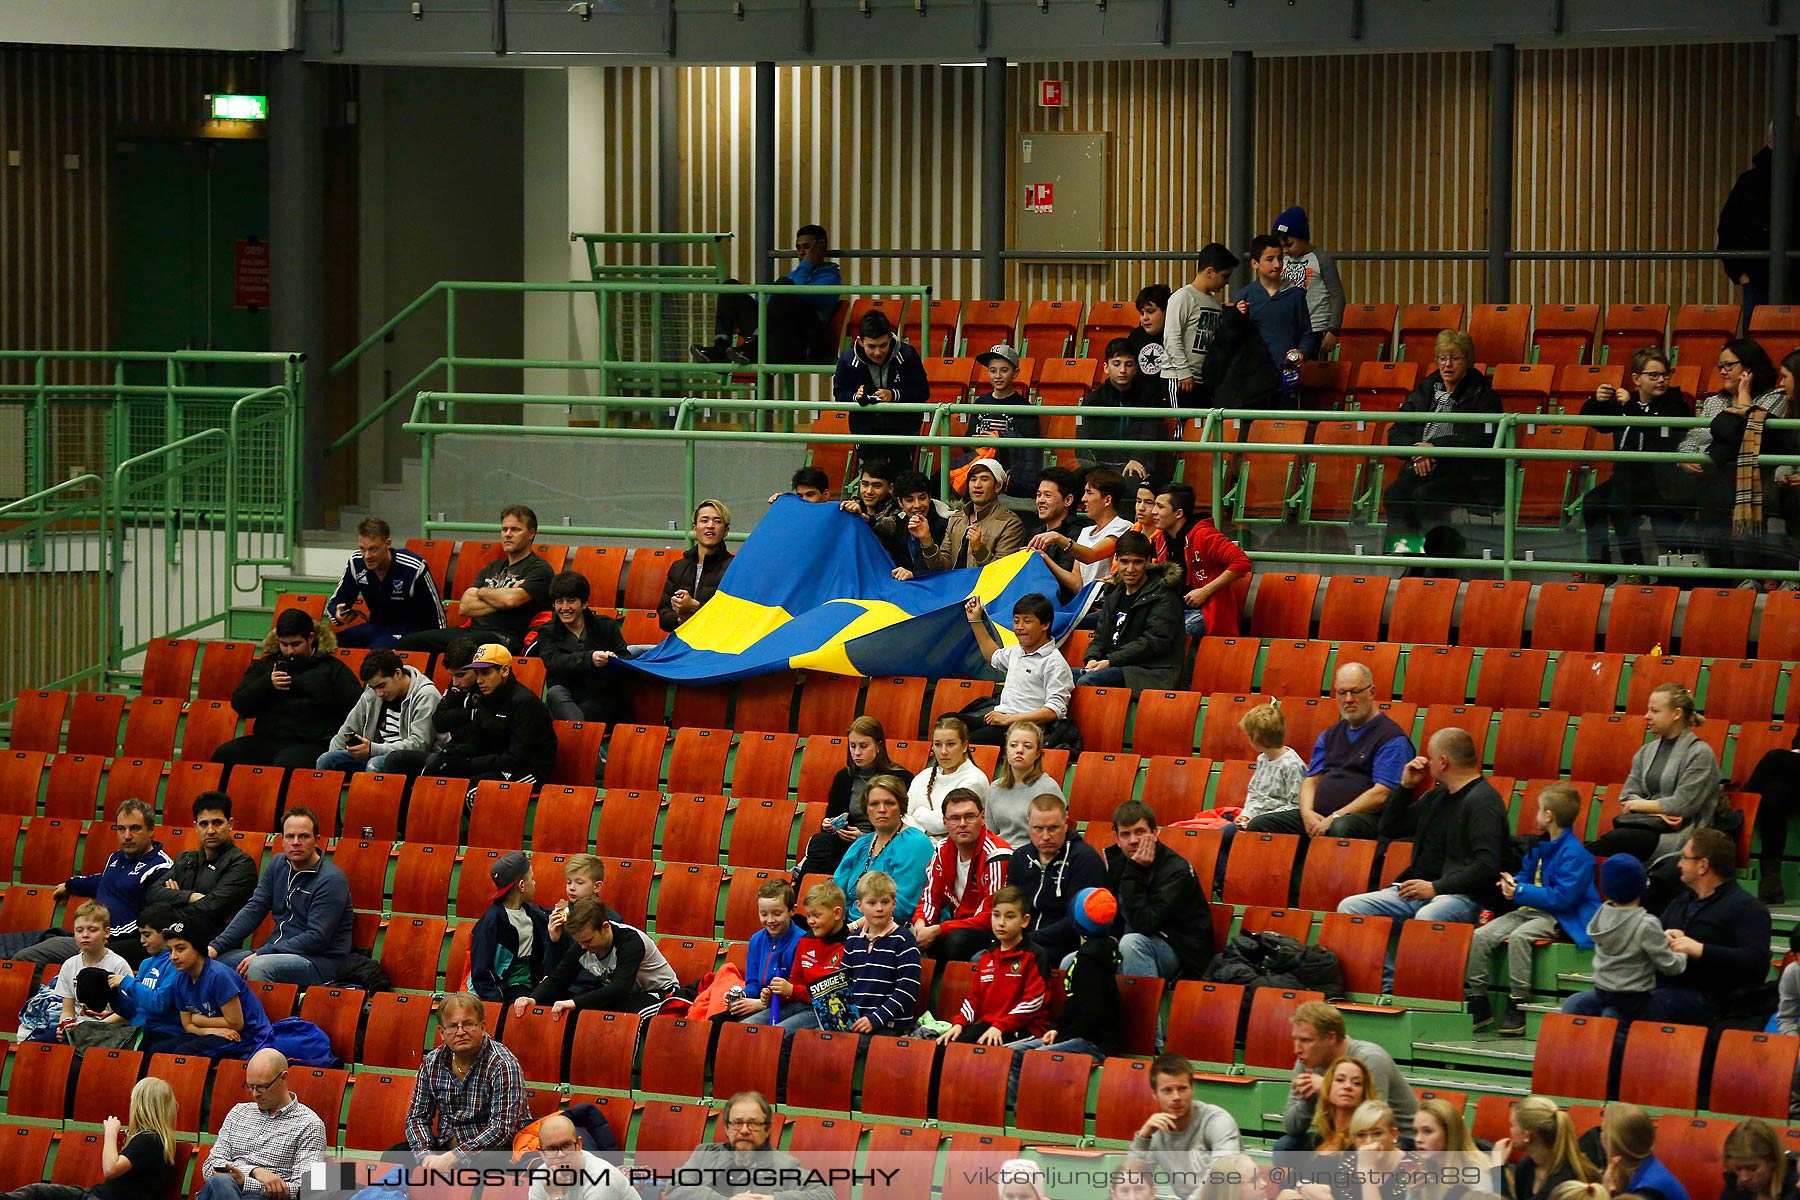 Landskamp Sverige-Finland 3-6,herr,Arena Skövde,Skövde,Sverige,Futsal,,2016,177489